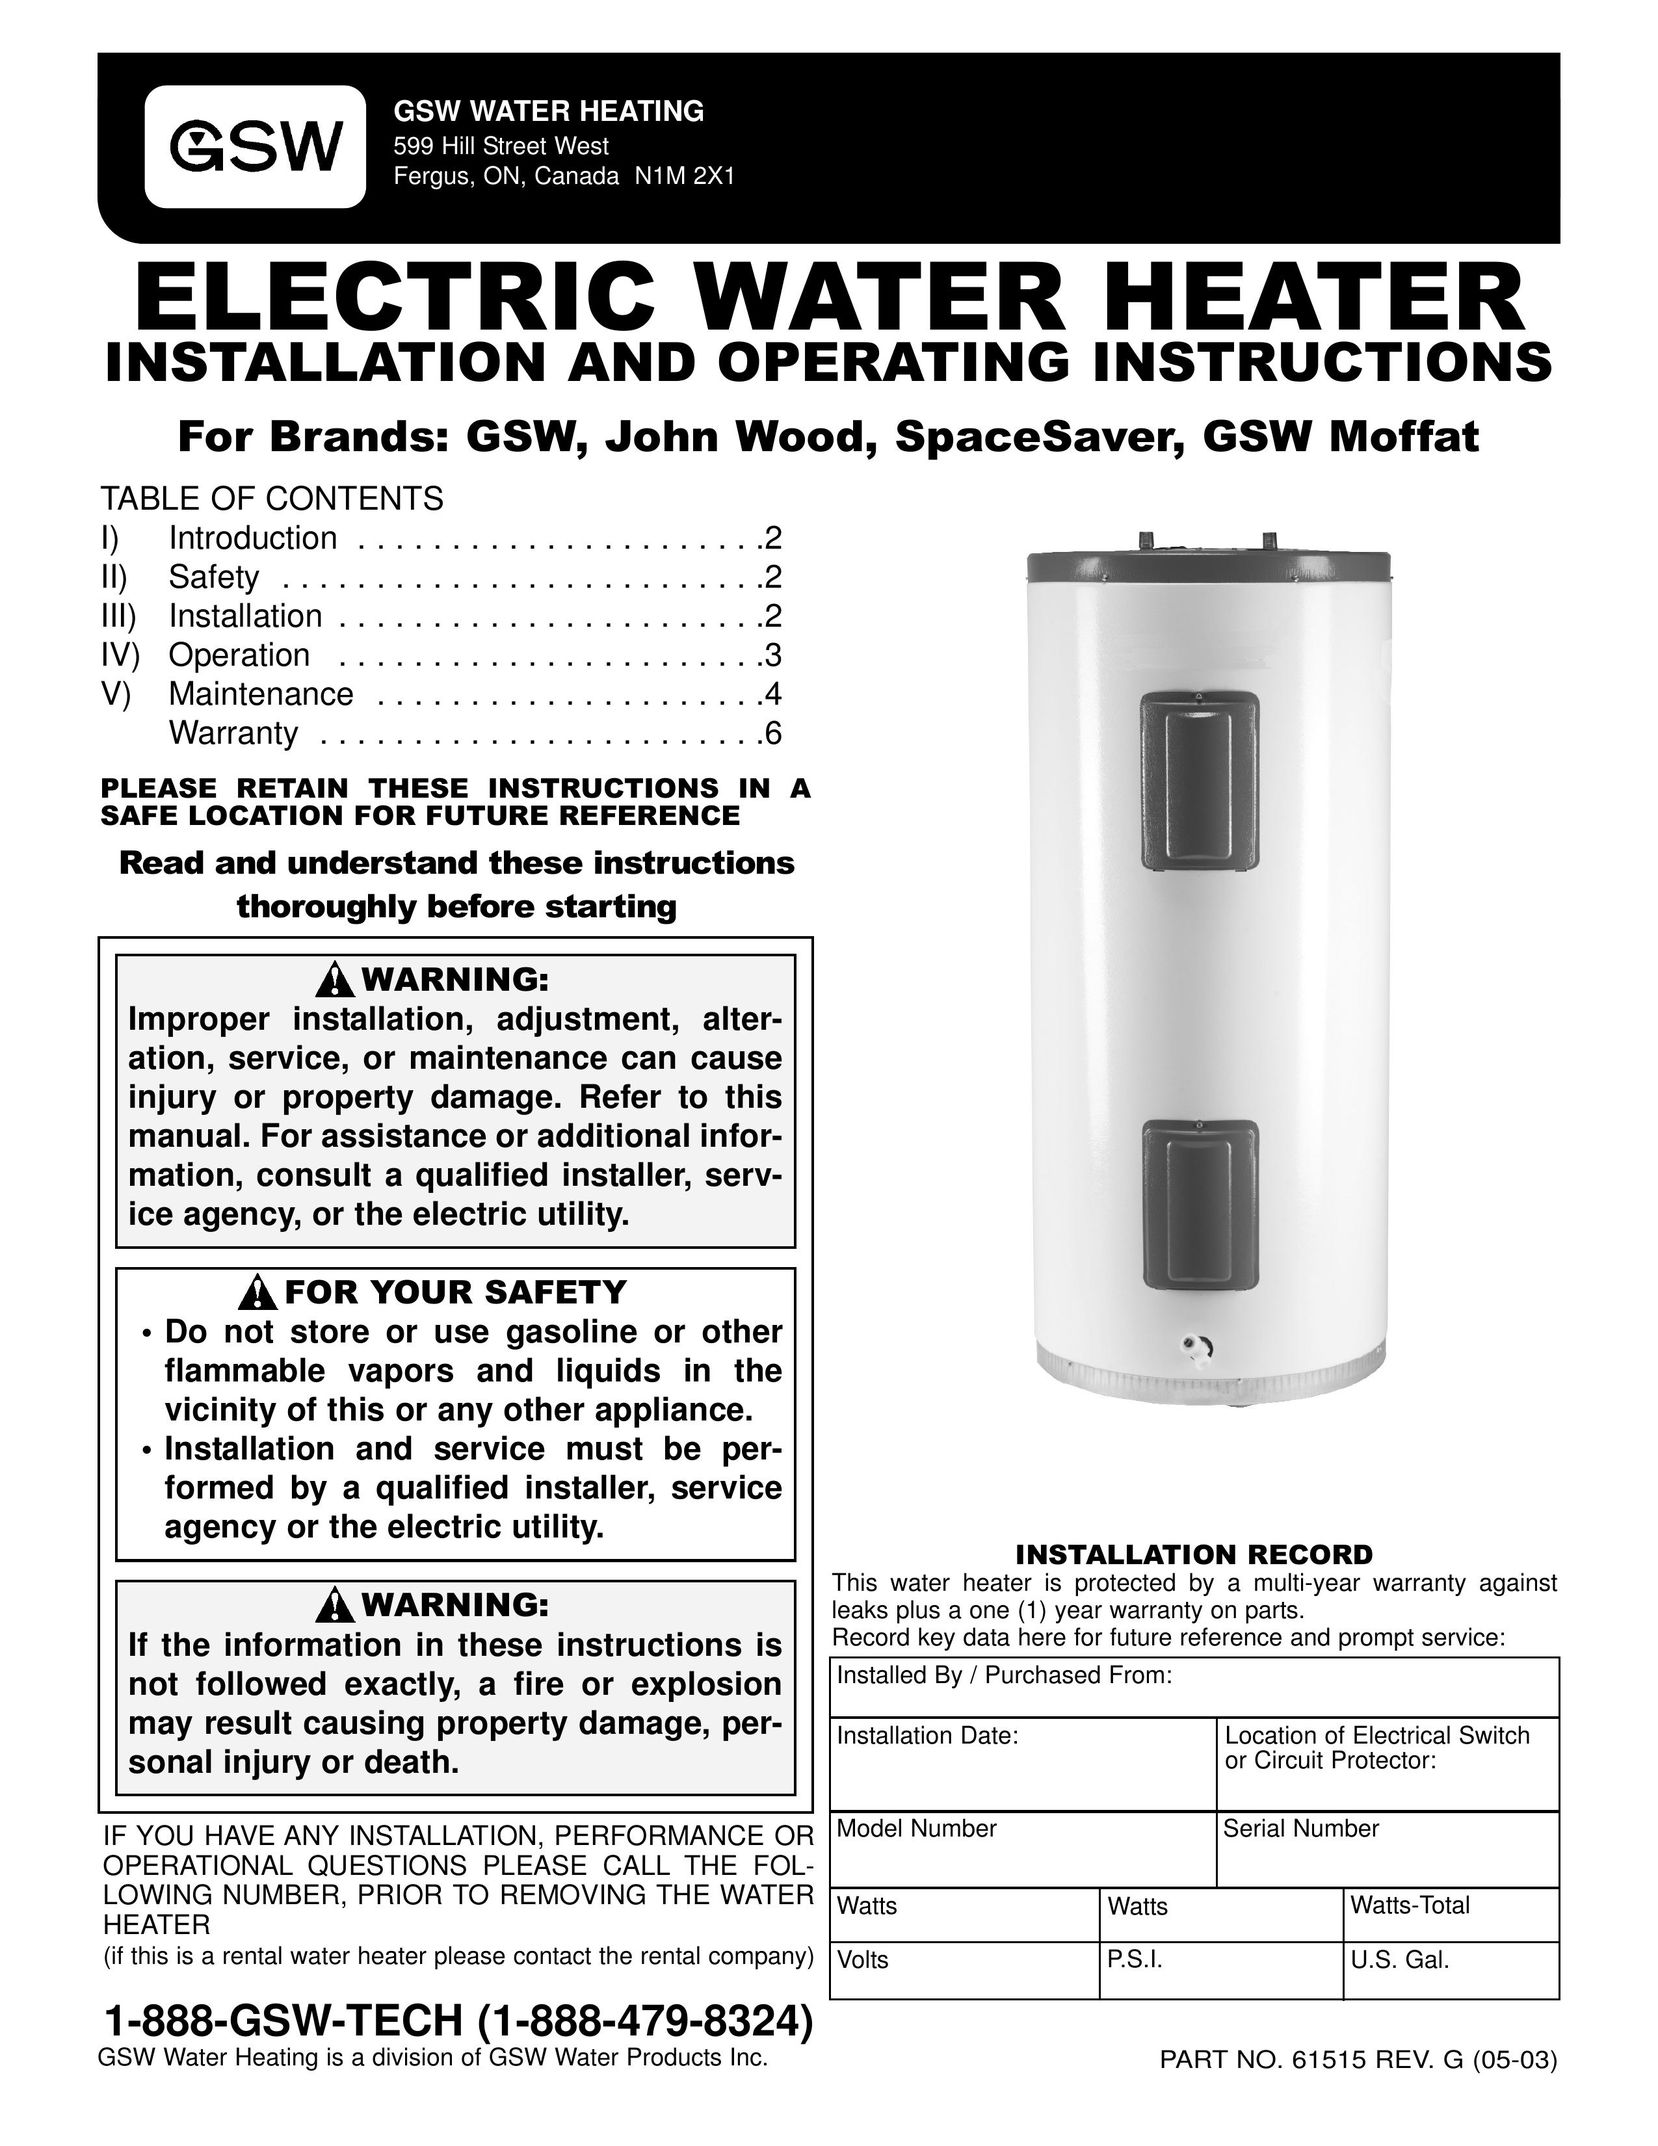 GSW Electric Water Heater P/N 61515 REV. G (05-03) Water Heater User Manual